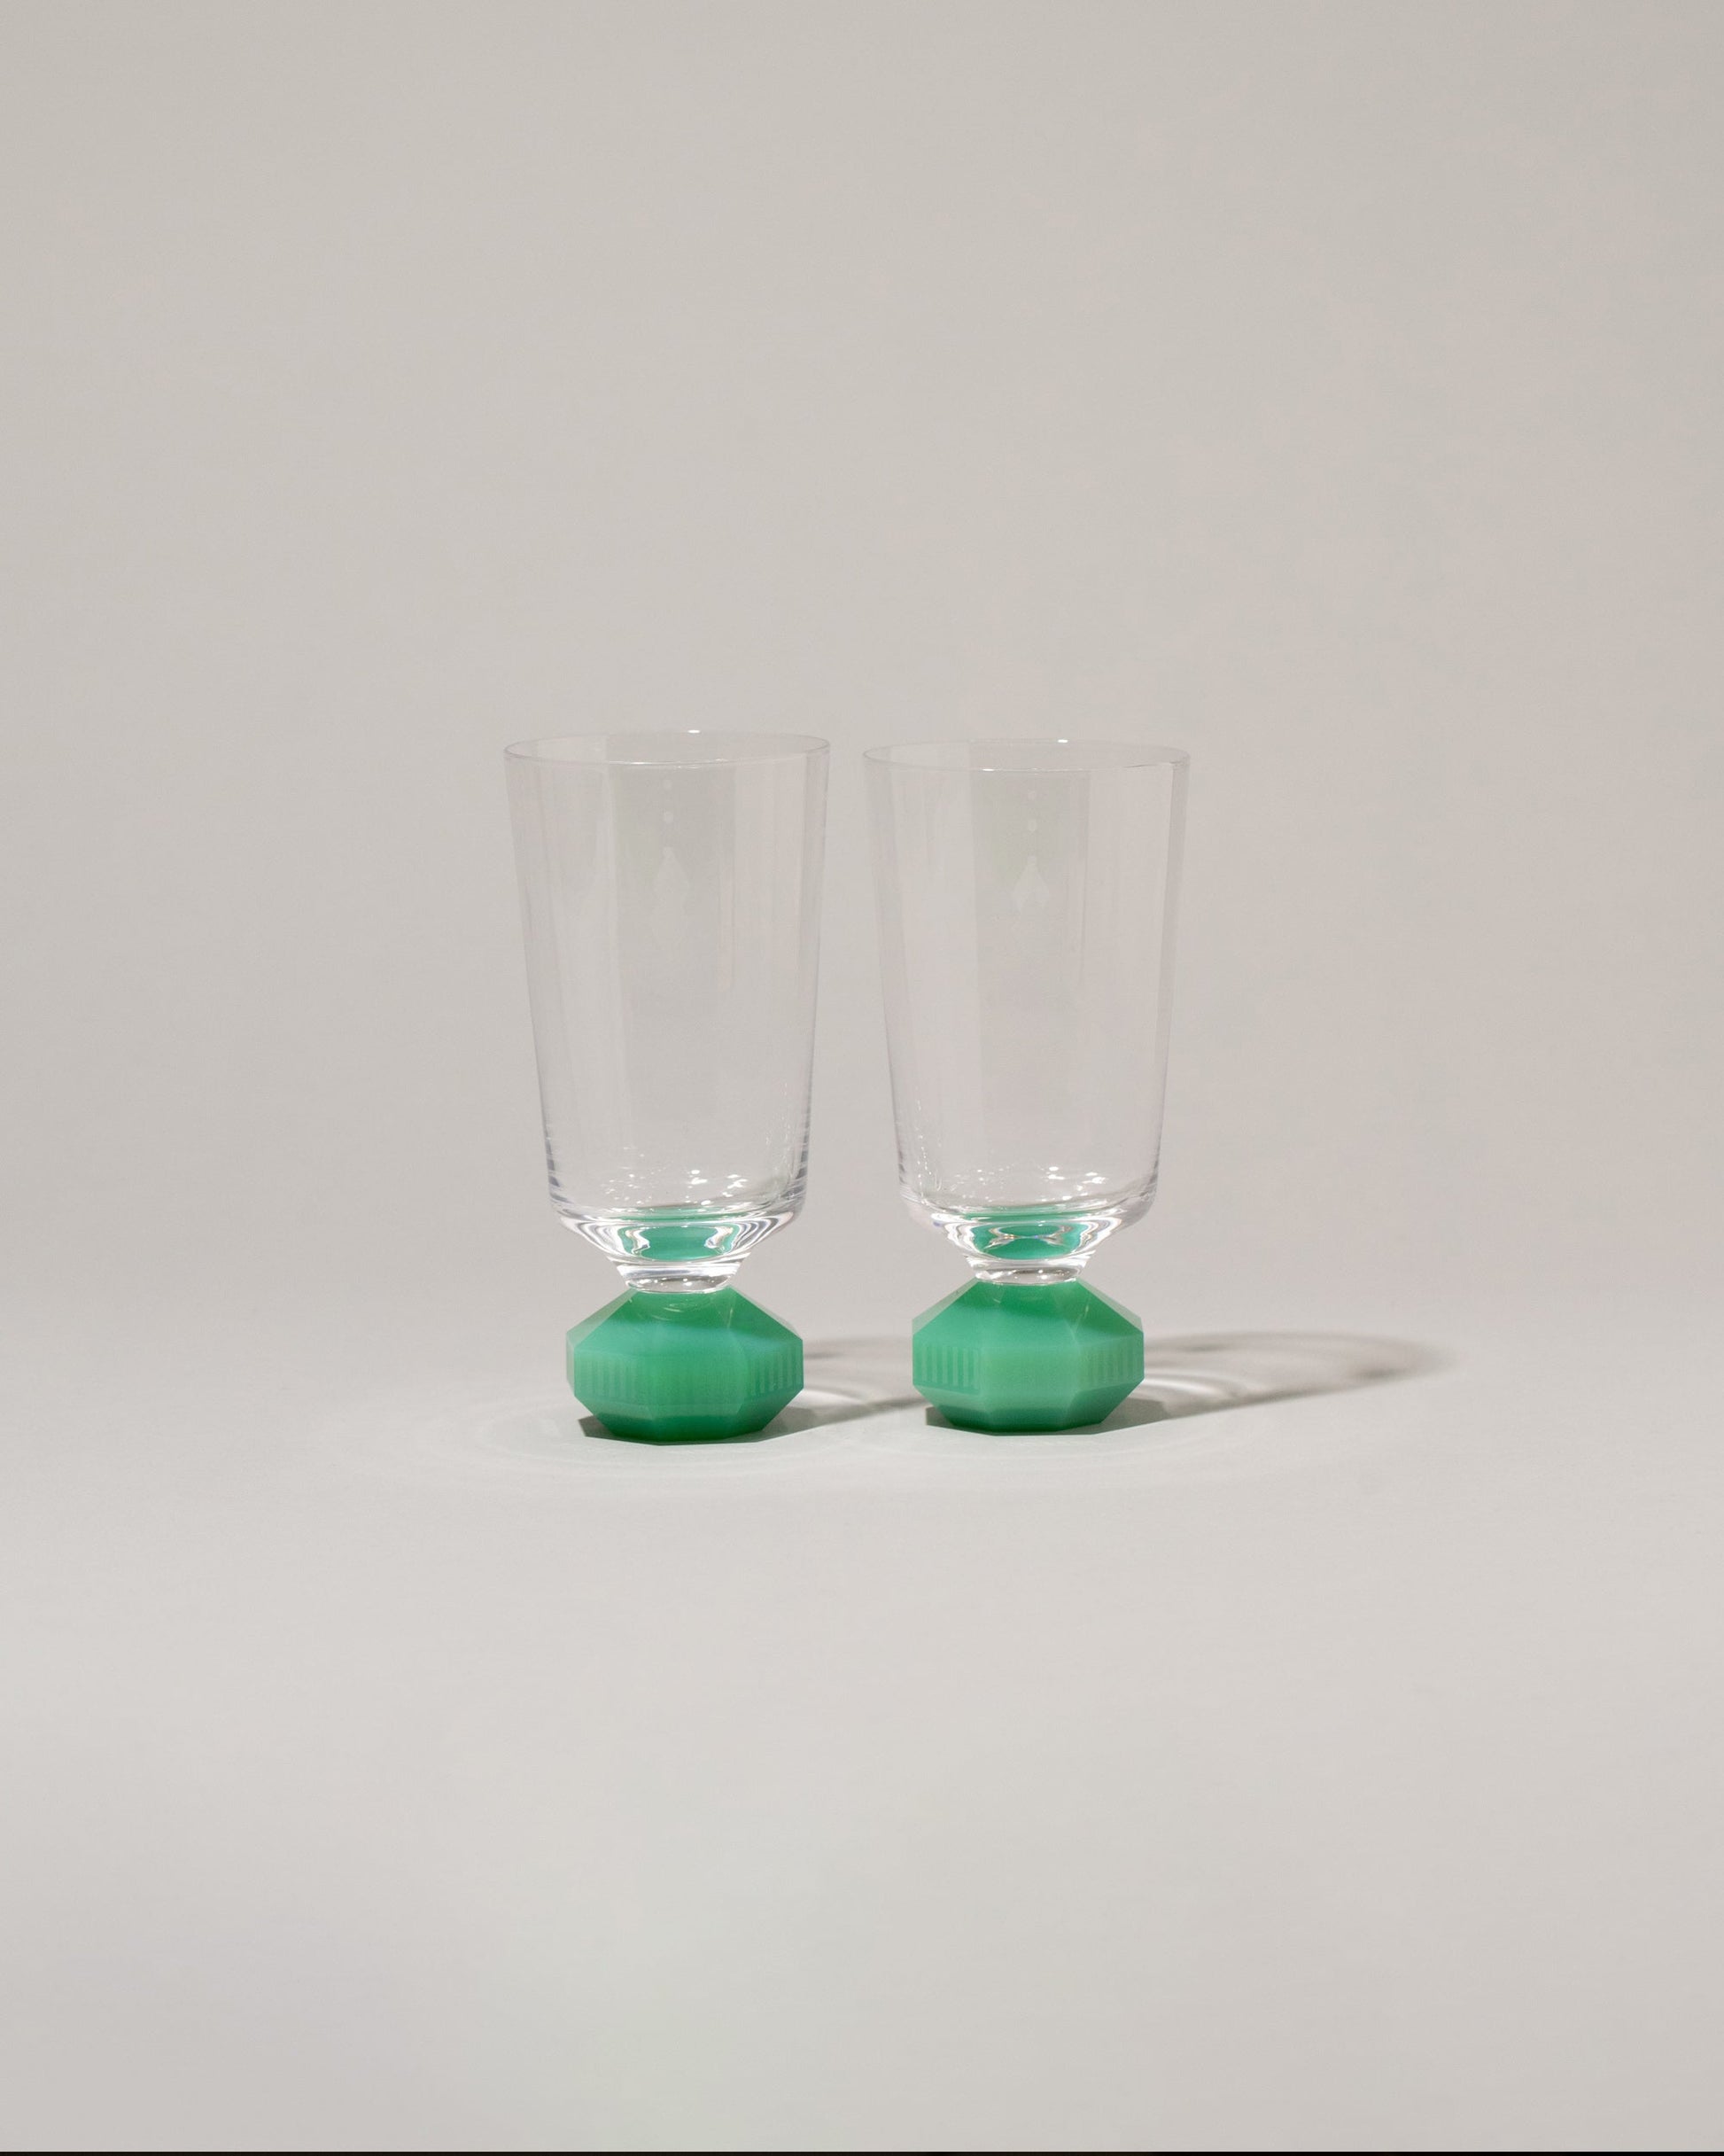  Chelsea Glass Sets on light color background.